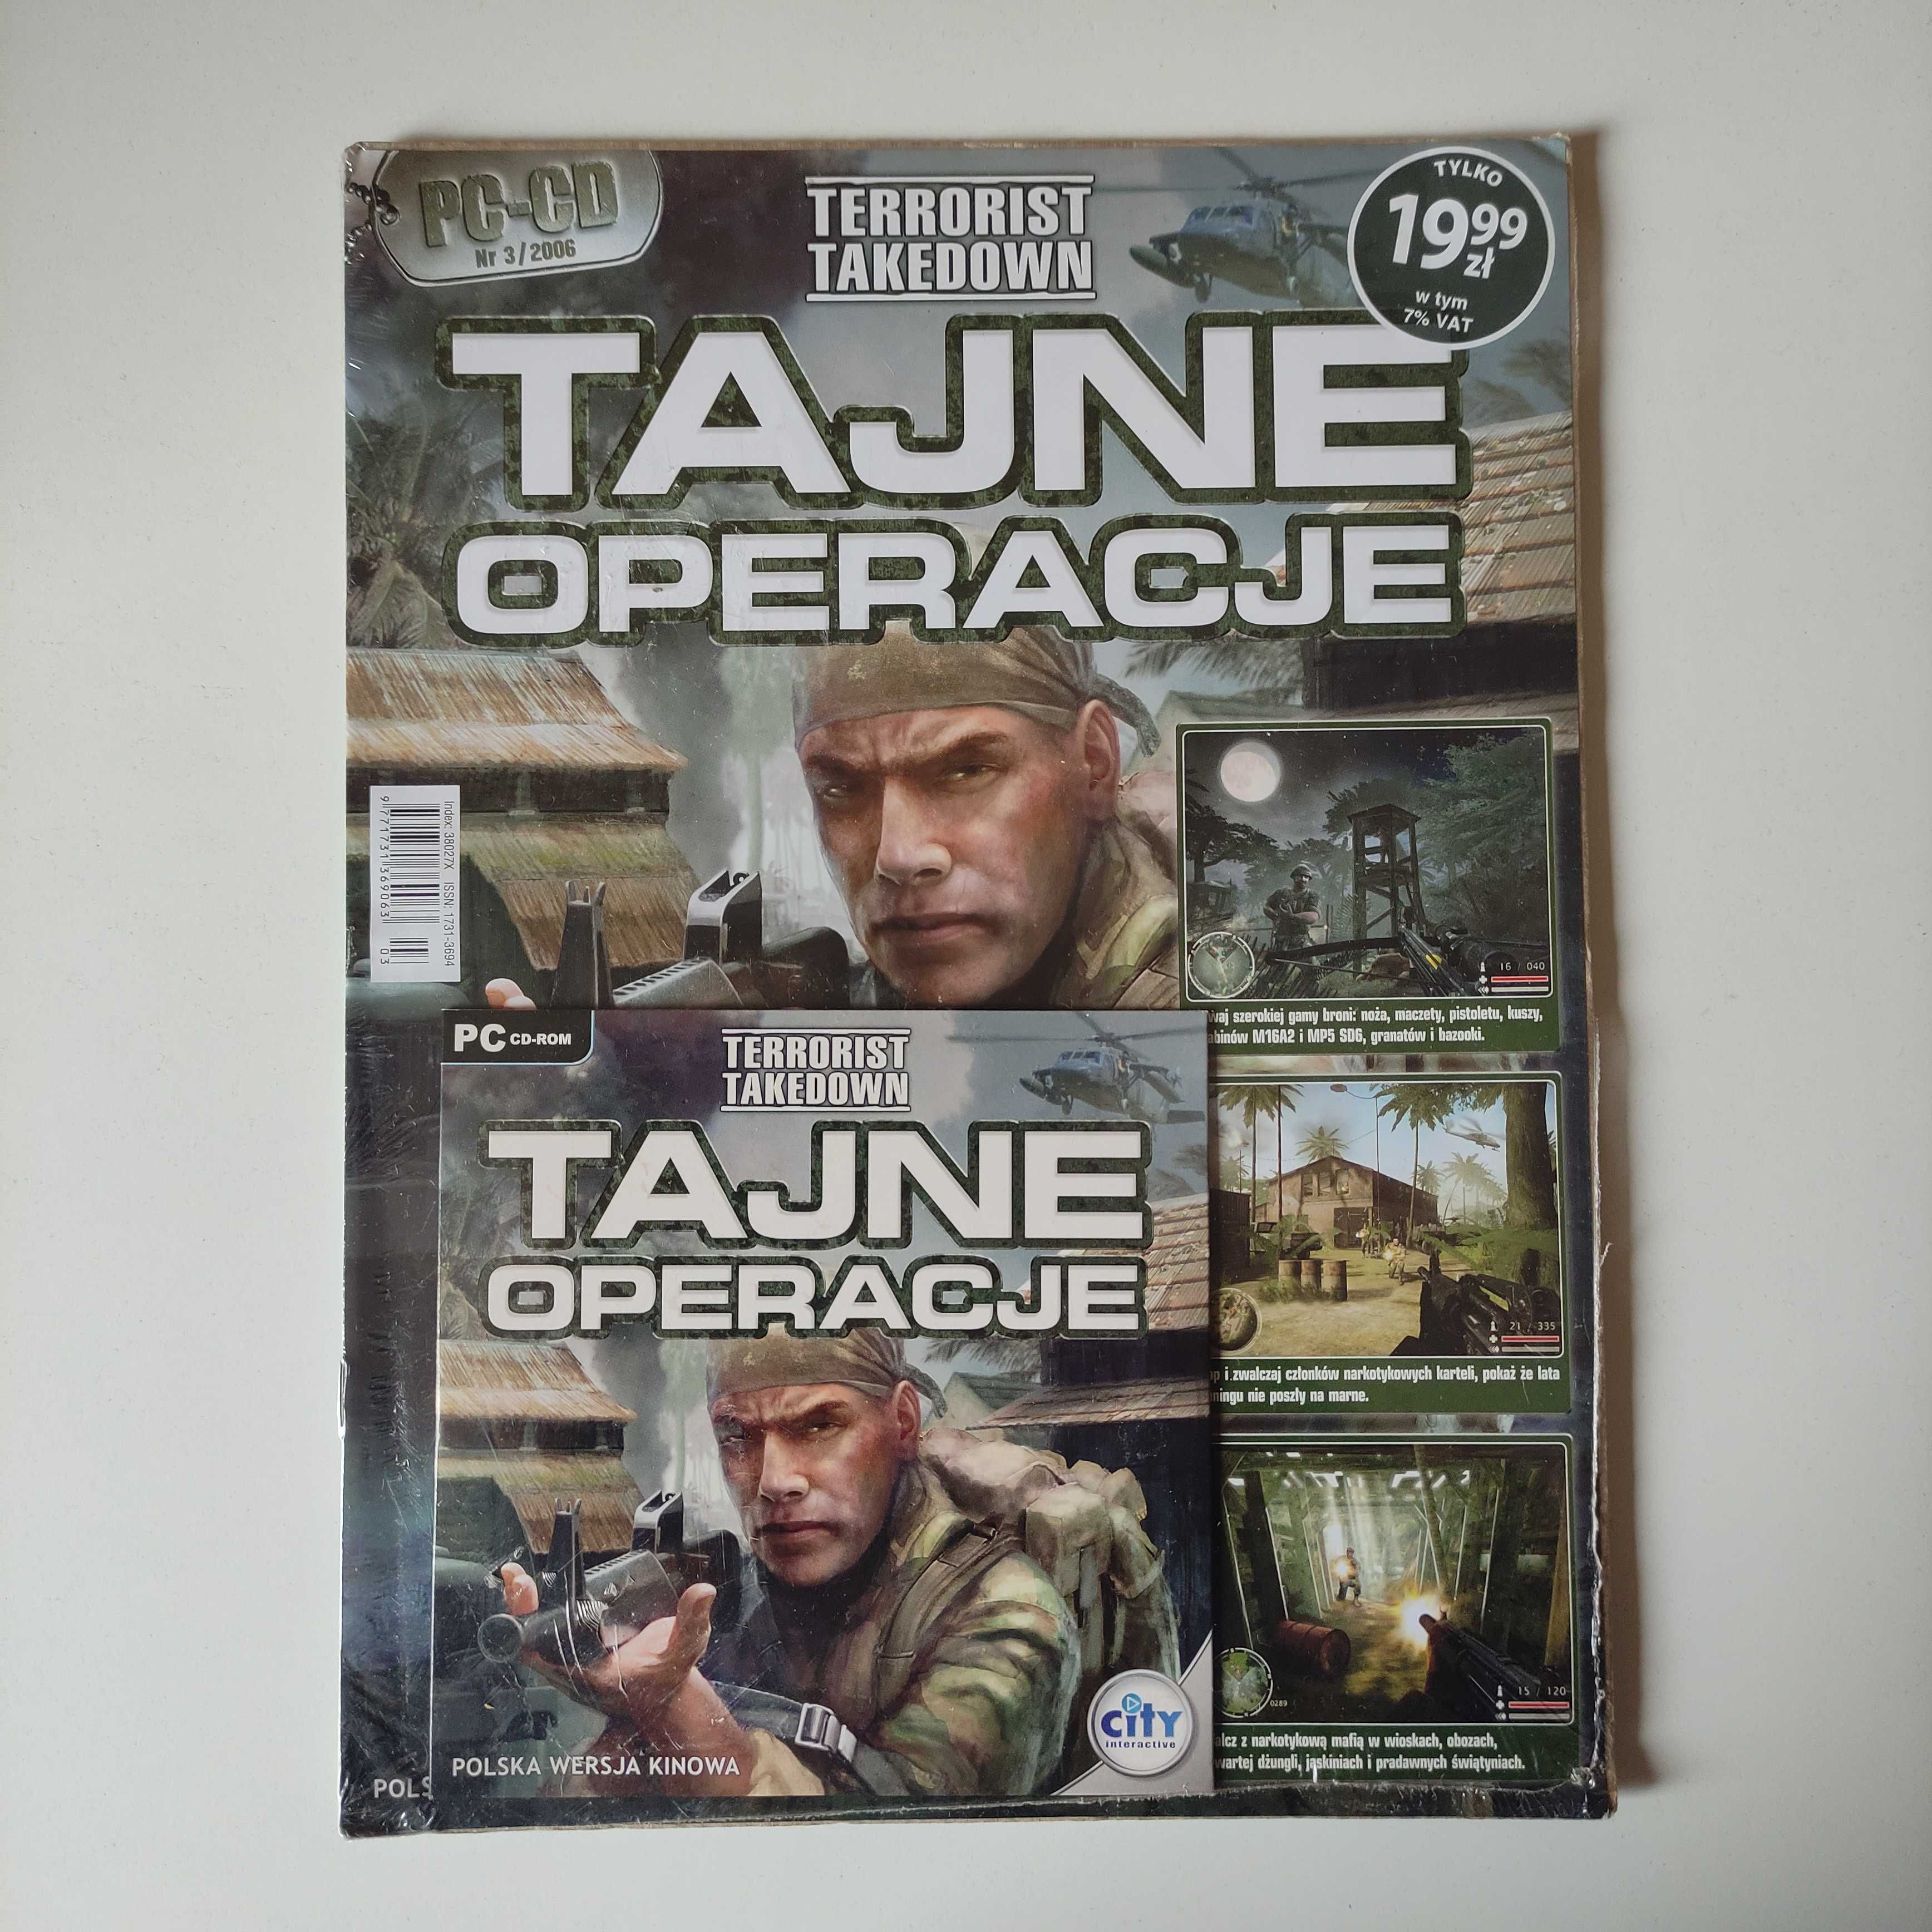 Terrorist Takedown - Tajne Operacje - Gra PC - PC-CD nr 3-2006